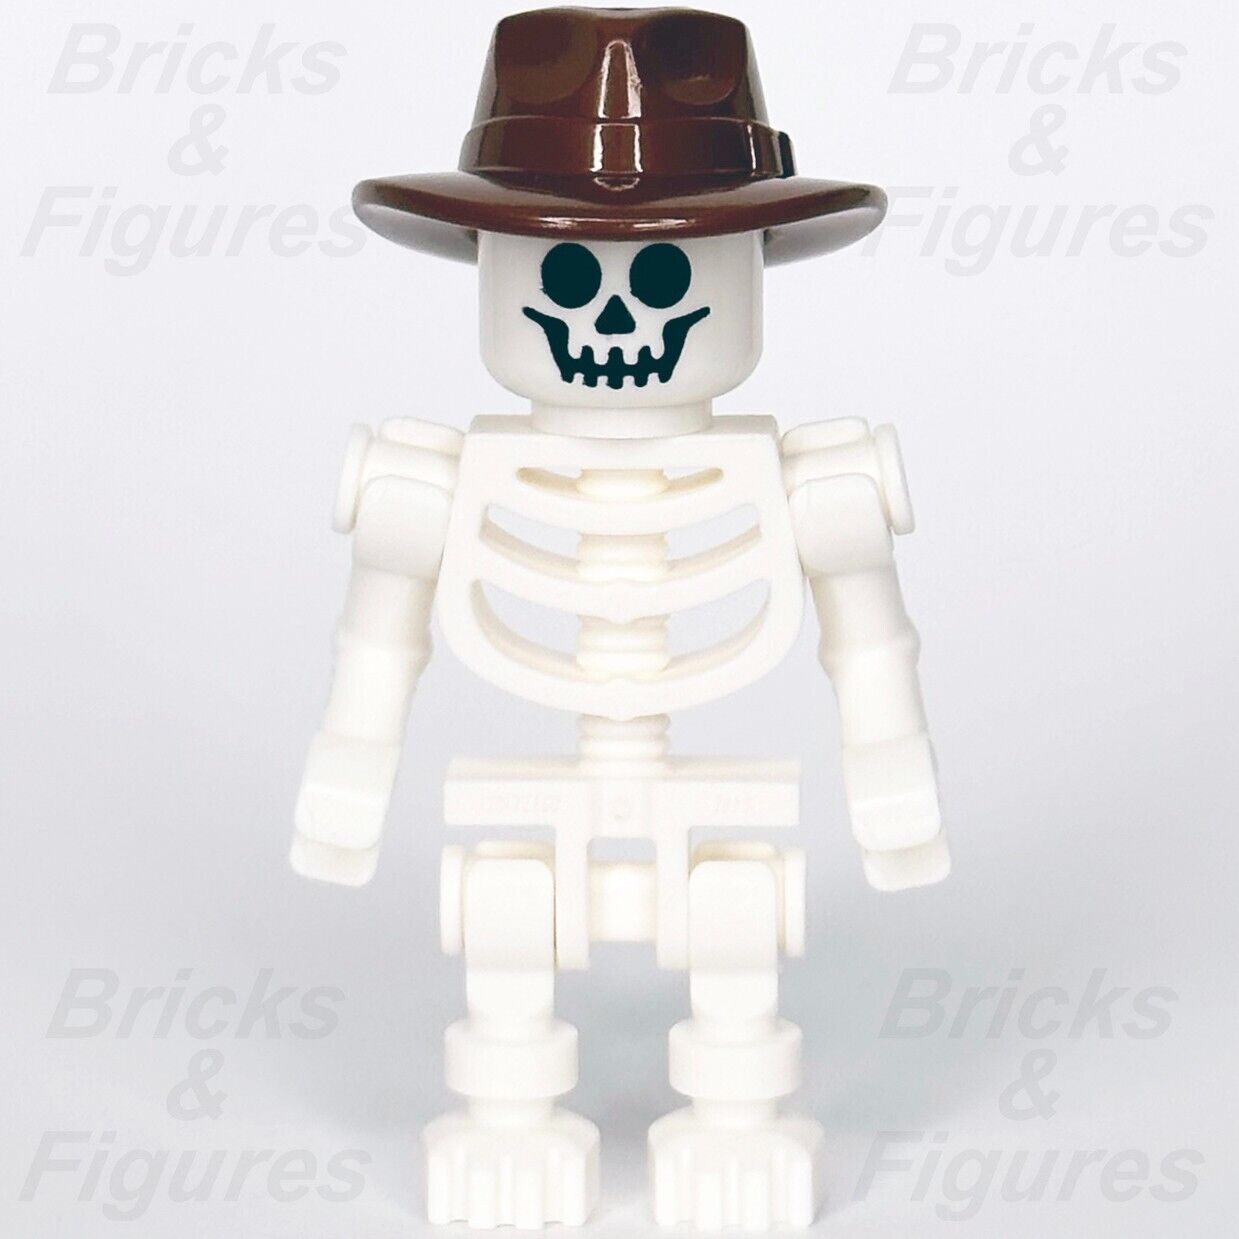 LEGO Ideas LEGO Sapiens Minifigure CUUSOO Skeleton Minifig 21320 idea064 w/ Hat 2